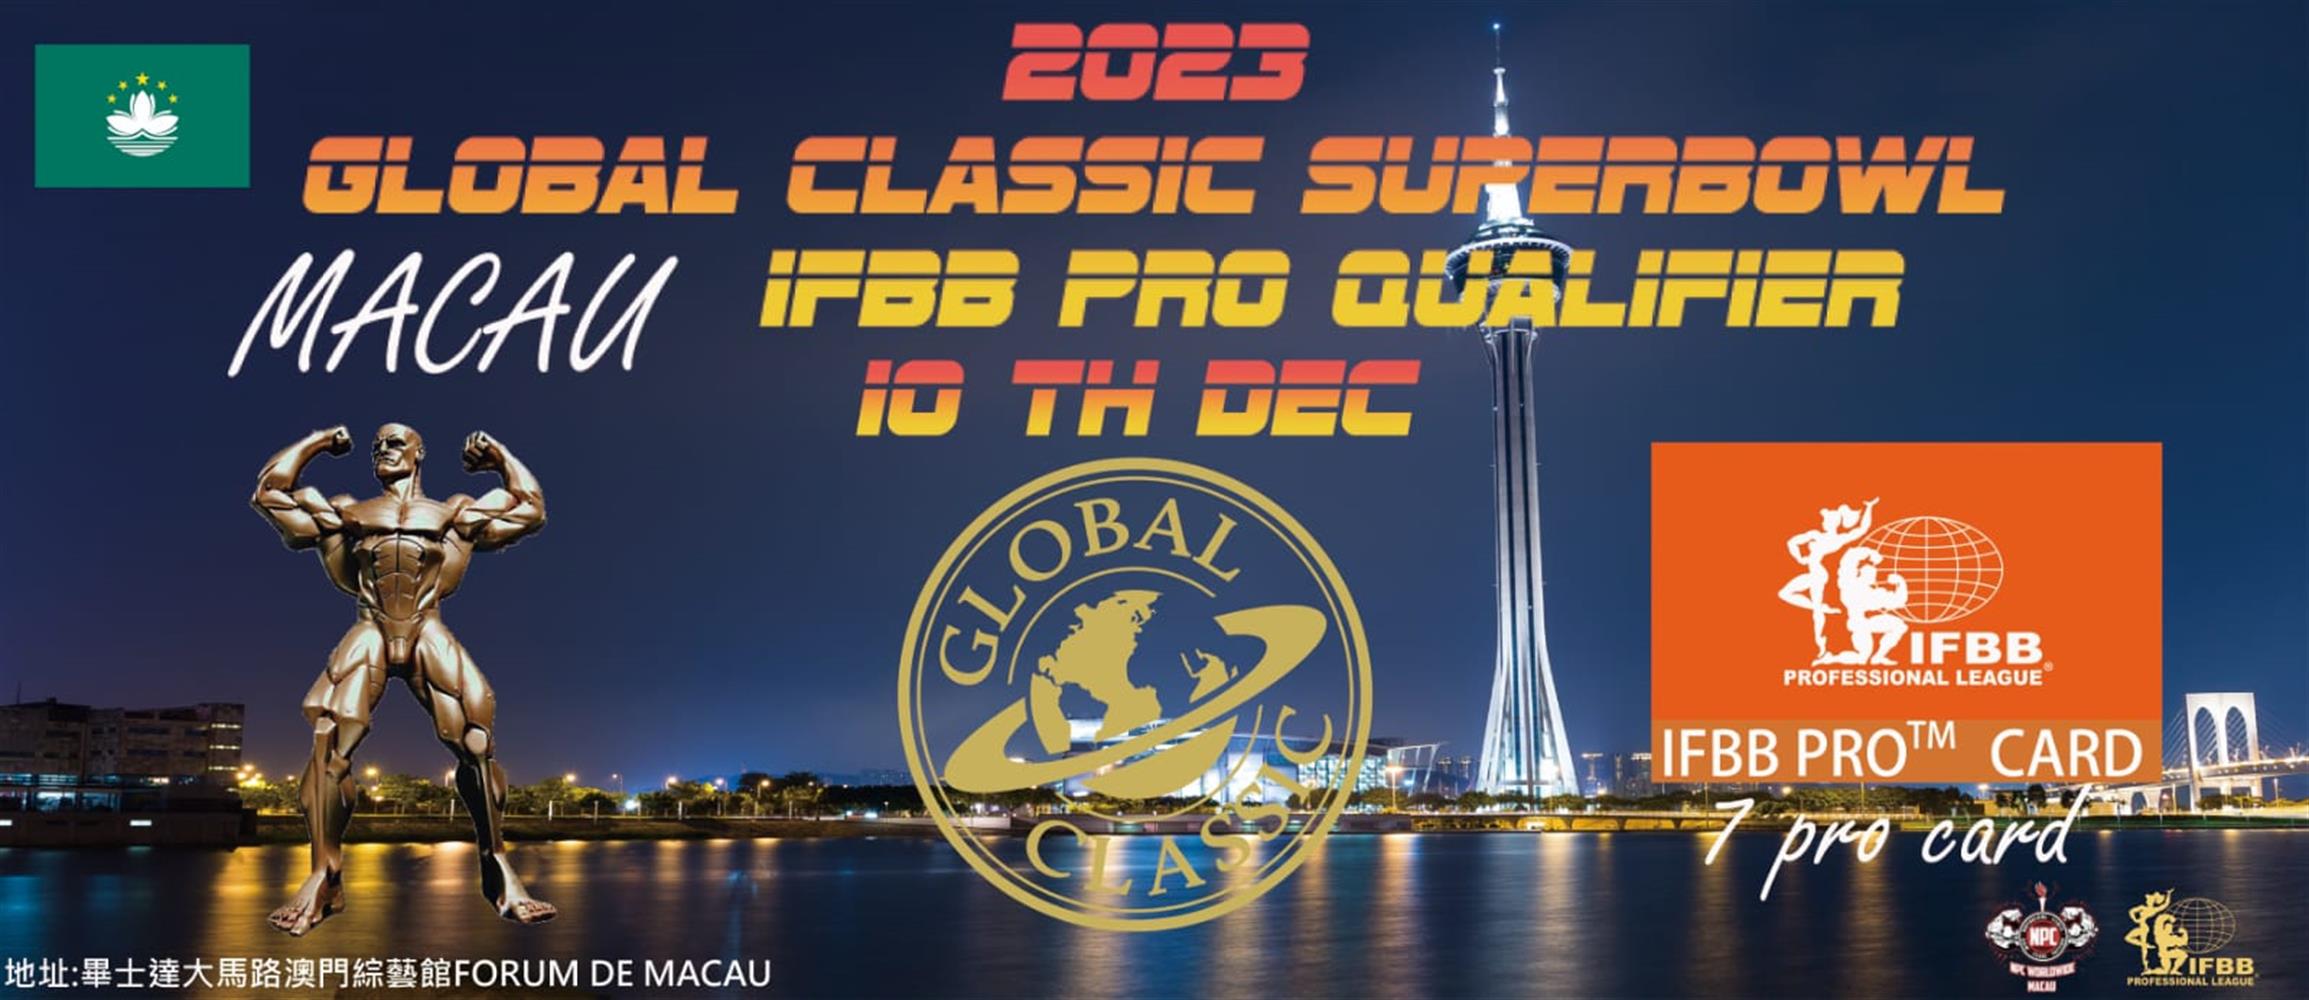 2023 NPC Worldwide Global Classic Superbowl Macau IFBB Pro Qualifier